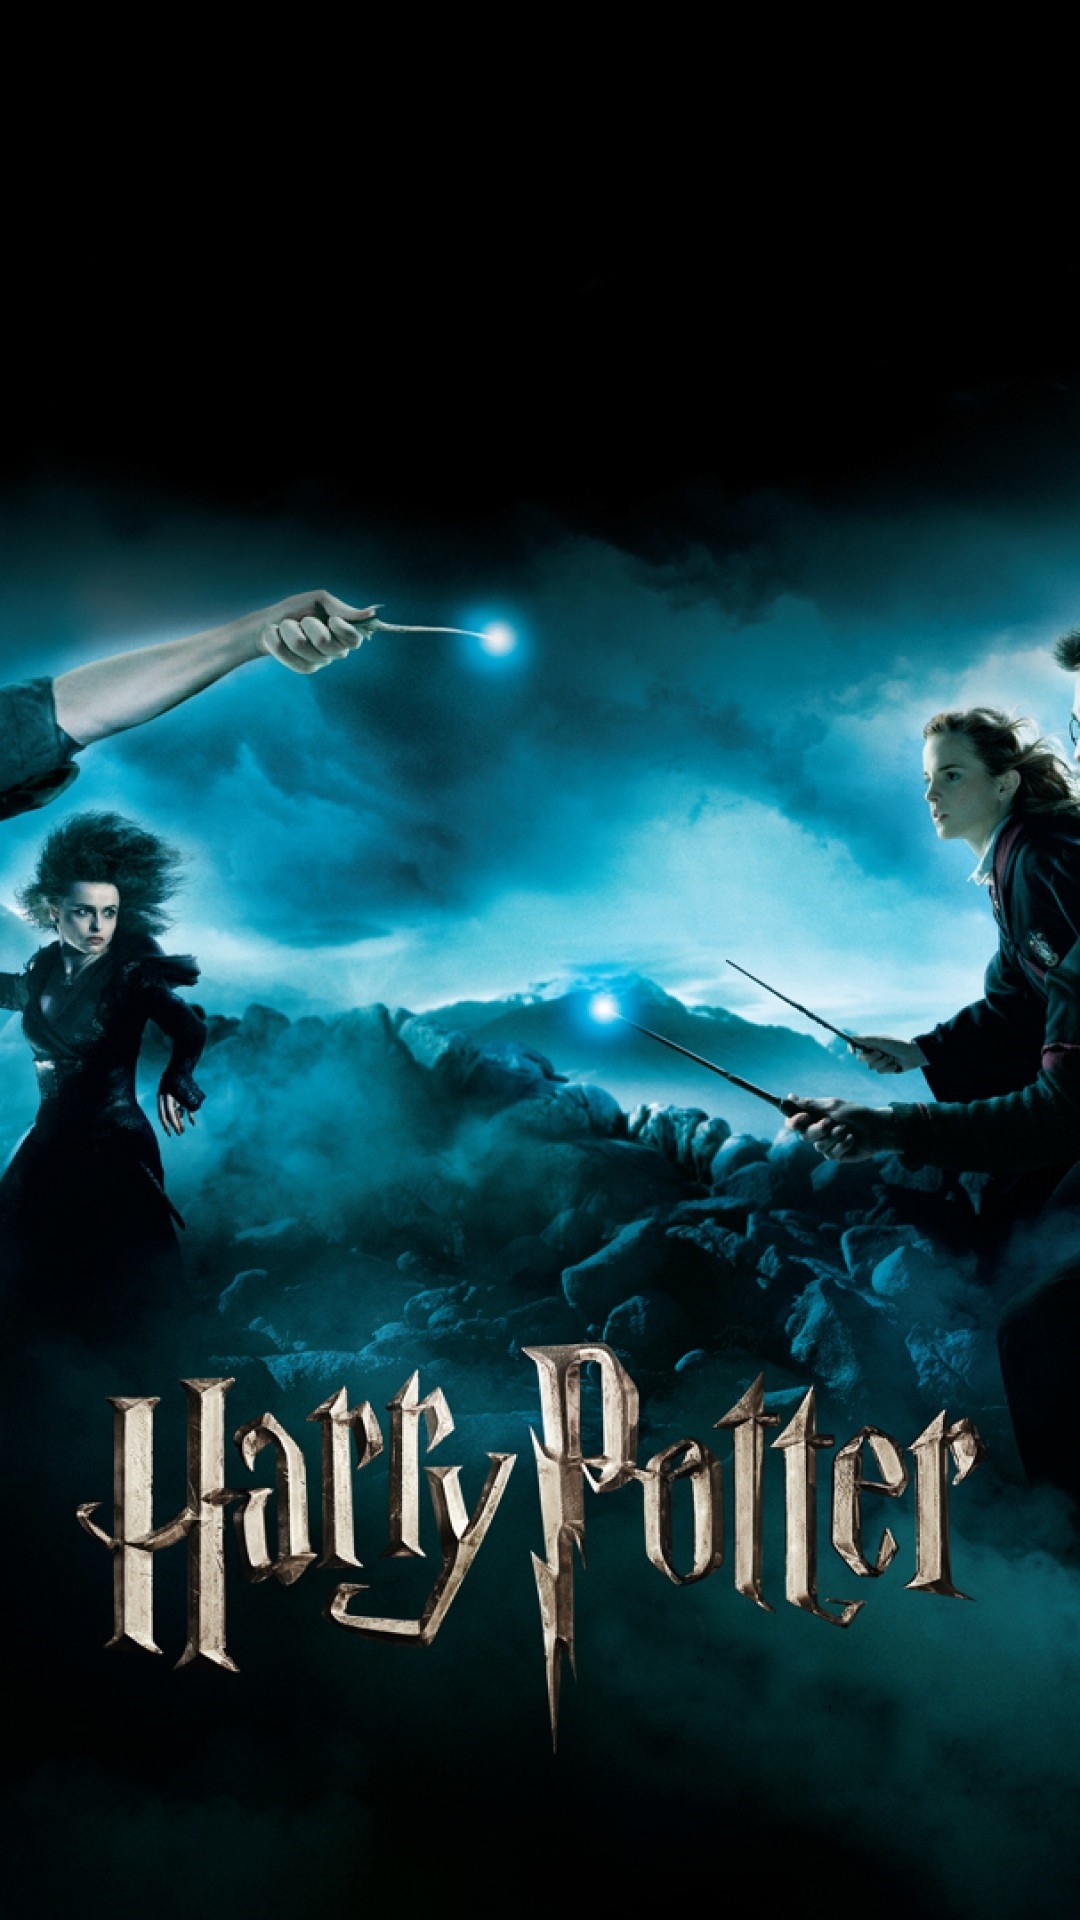 1080x1920 ... Harry Potter Wallpaper Iphone harry potter iphone wallpaper4 ...